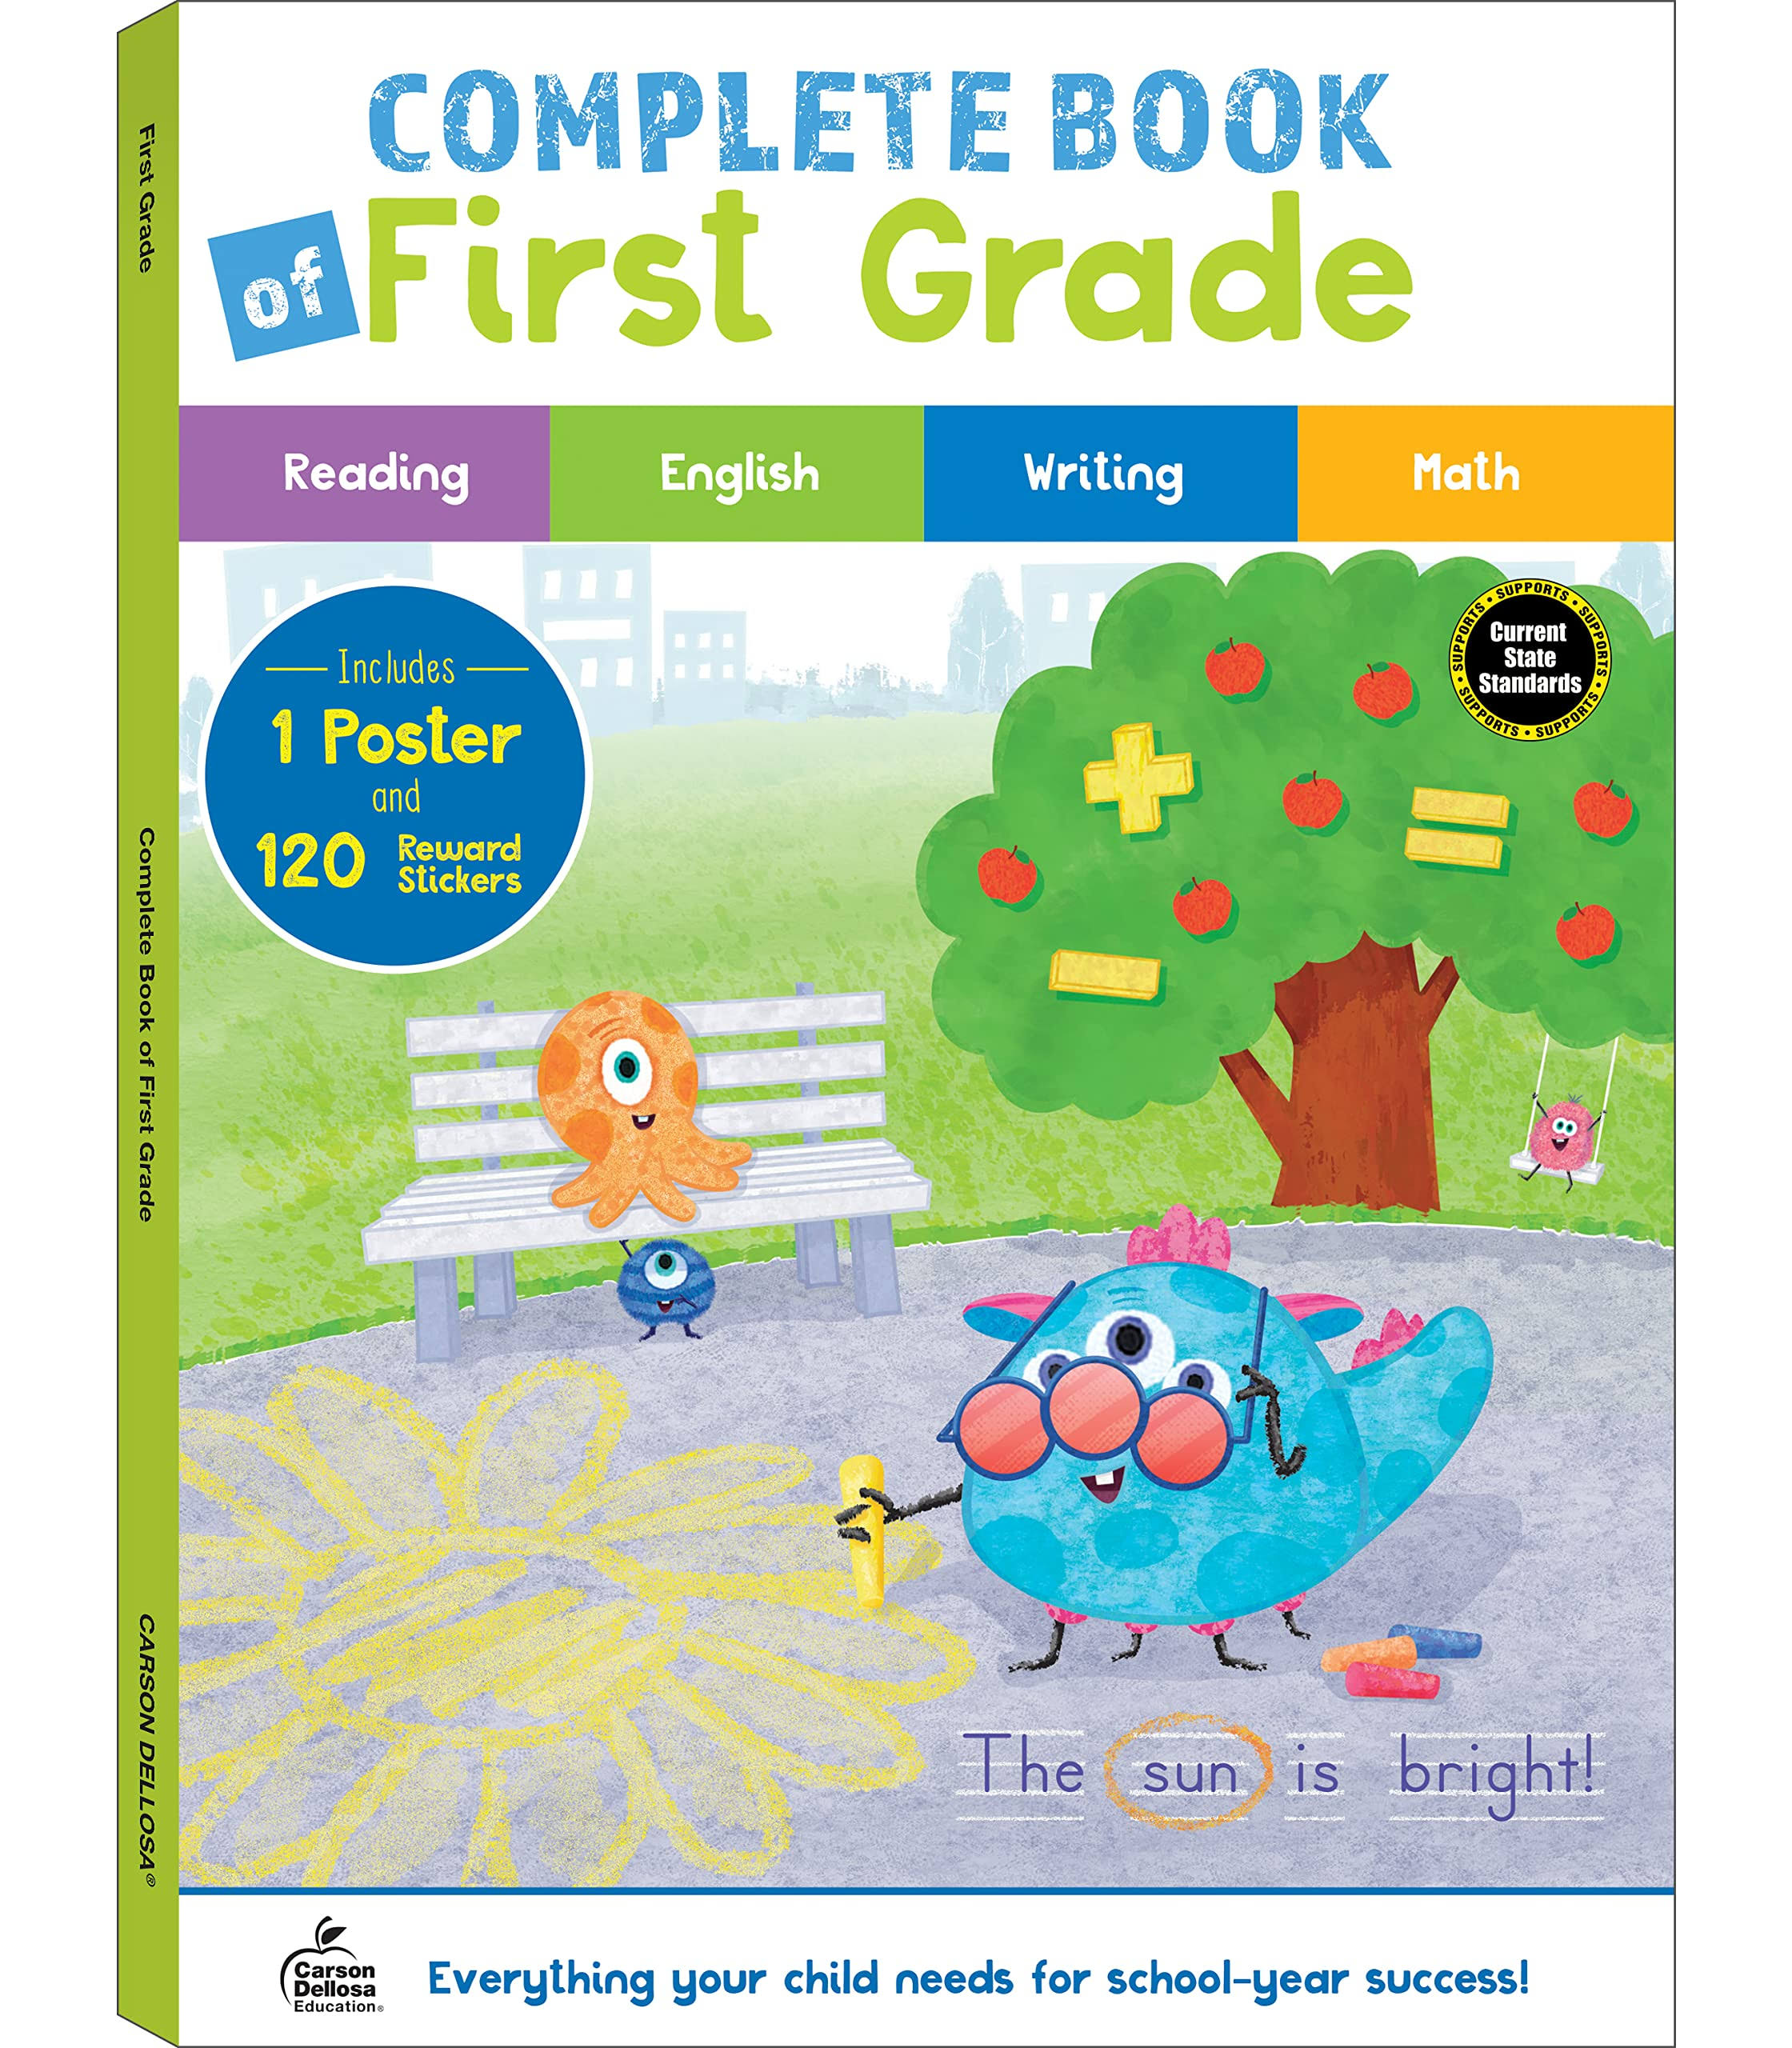 Complete Book of First Grade by Carson Dellosa Education